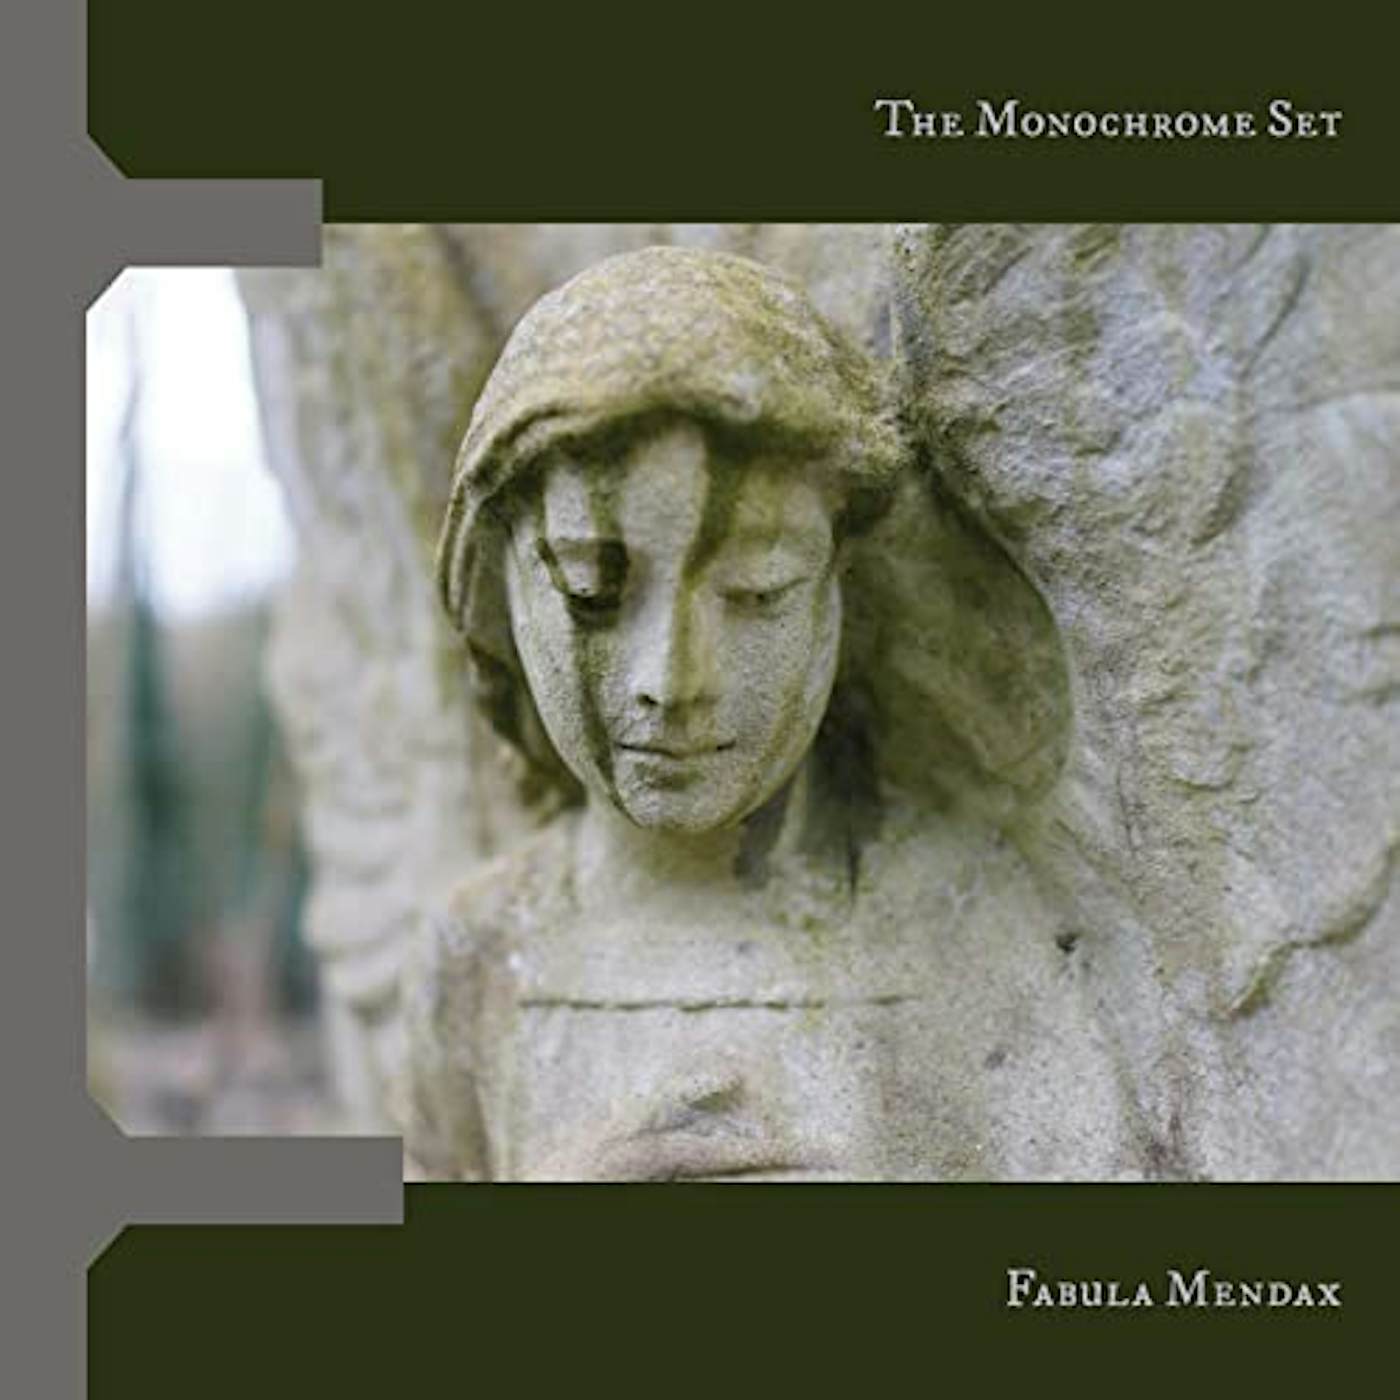 The Monochrome Set Fabula Mendax Vinyl Record